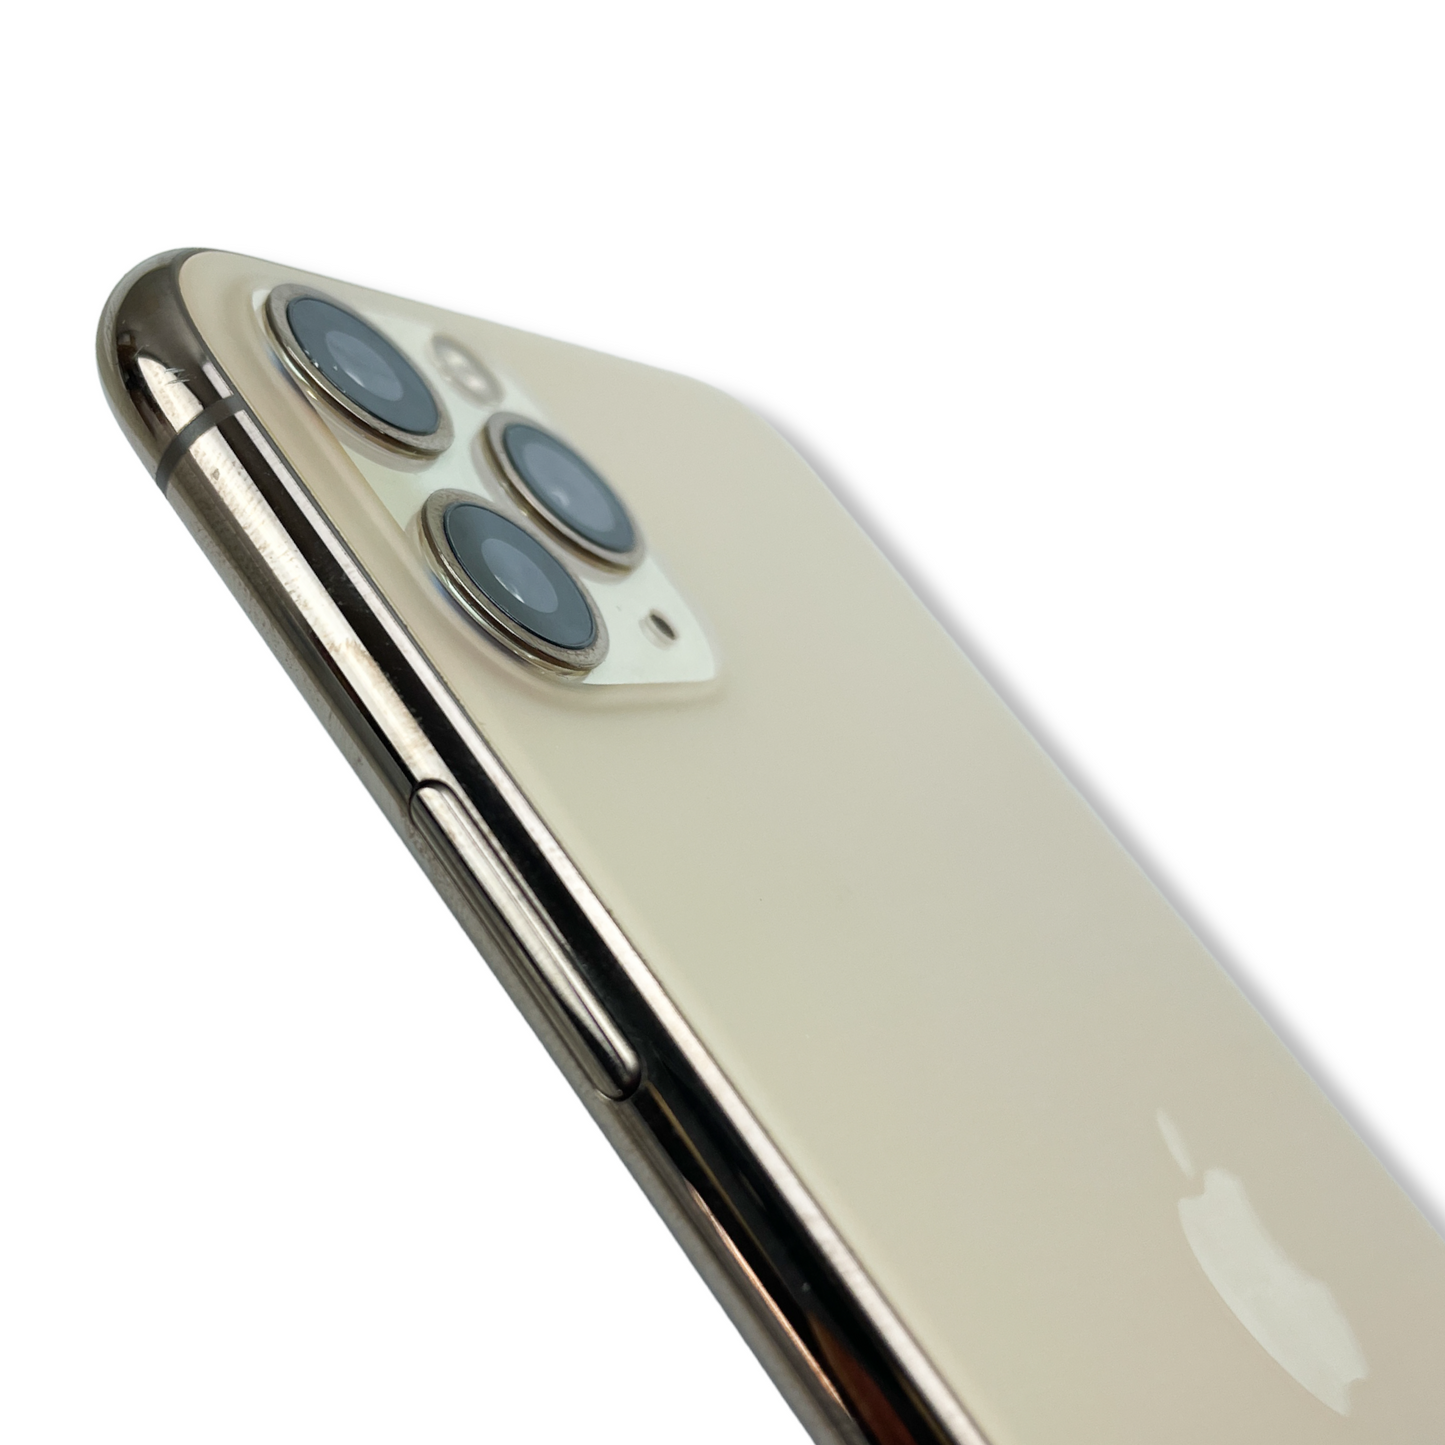 iPhone 11 Pro Max Gold Housing, Camera, Battery Apple Original - Grade B